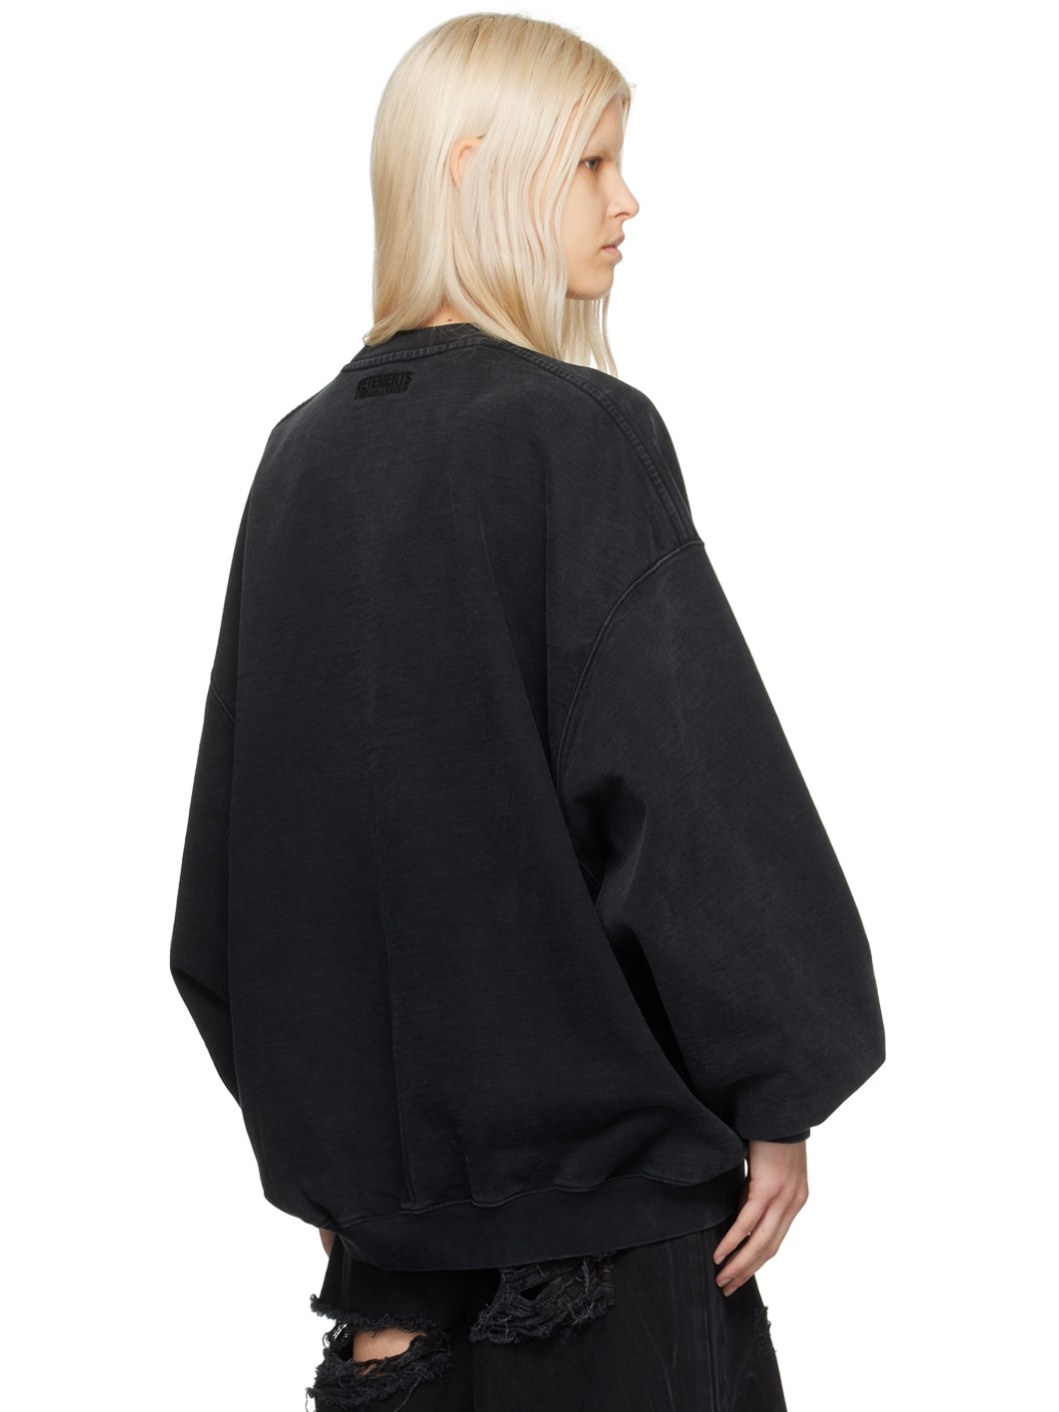 Black Very Expensive Sweatshirt - 3